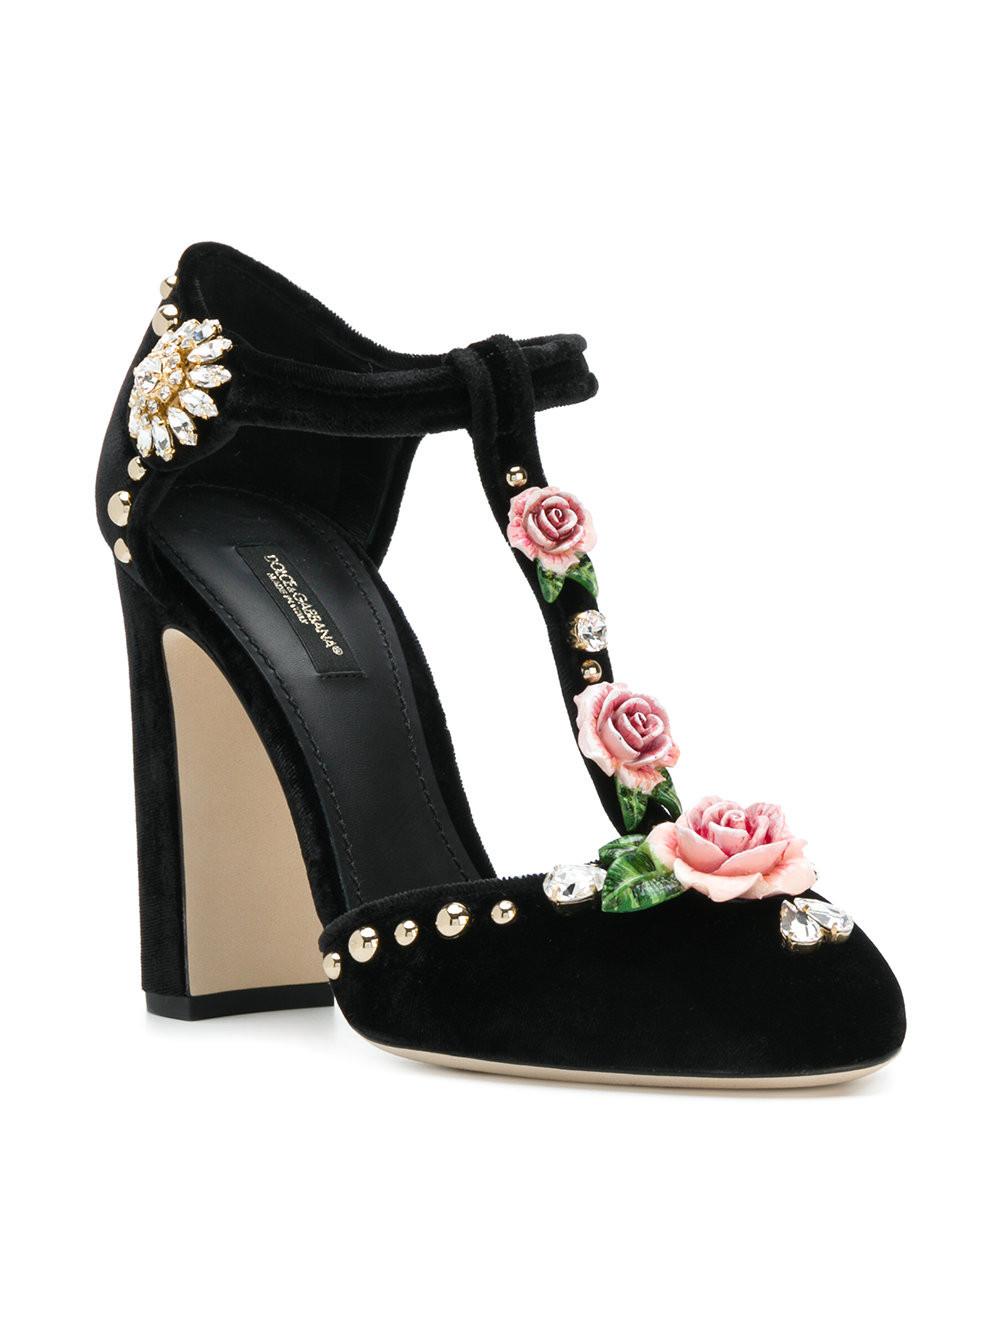 Dolce & Gabbana Rose Mary Jane Sandals in Black - Lyst